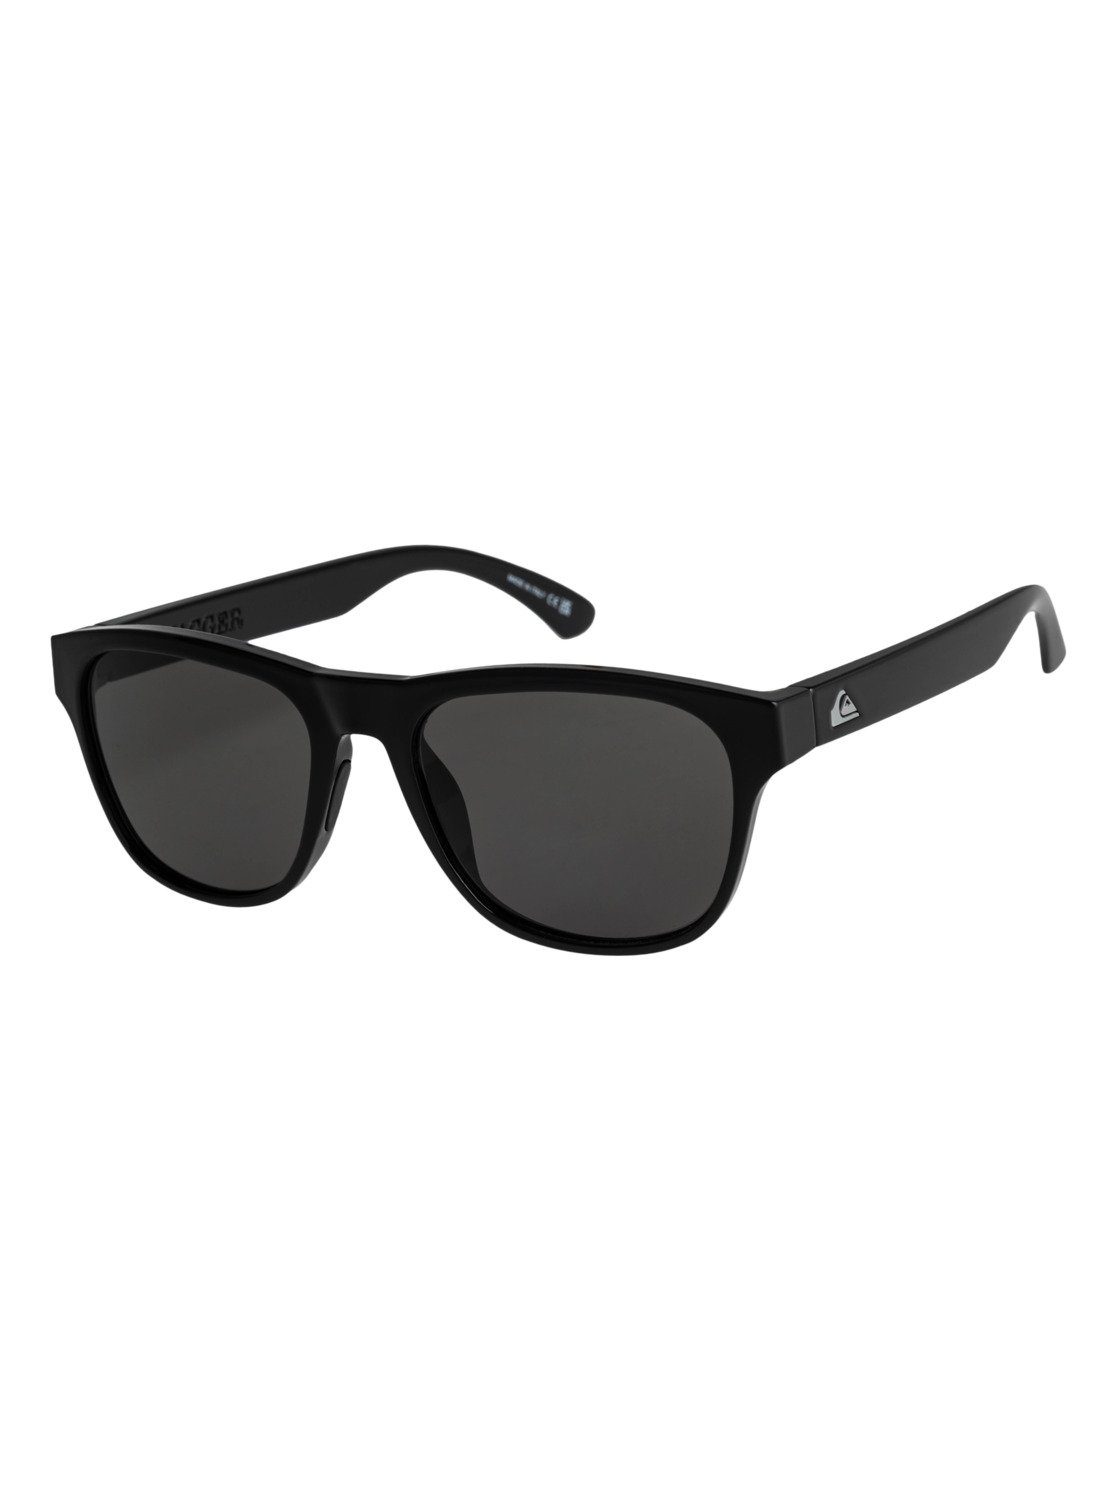 Tagger Black/Grey Sonnenbrille Quiksilver